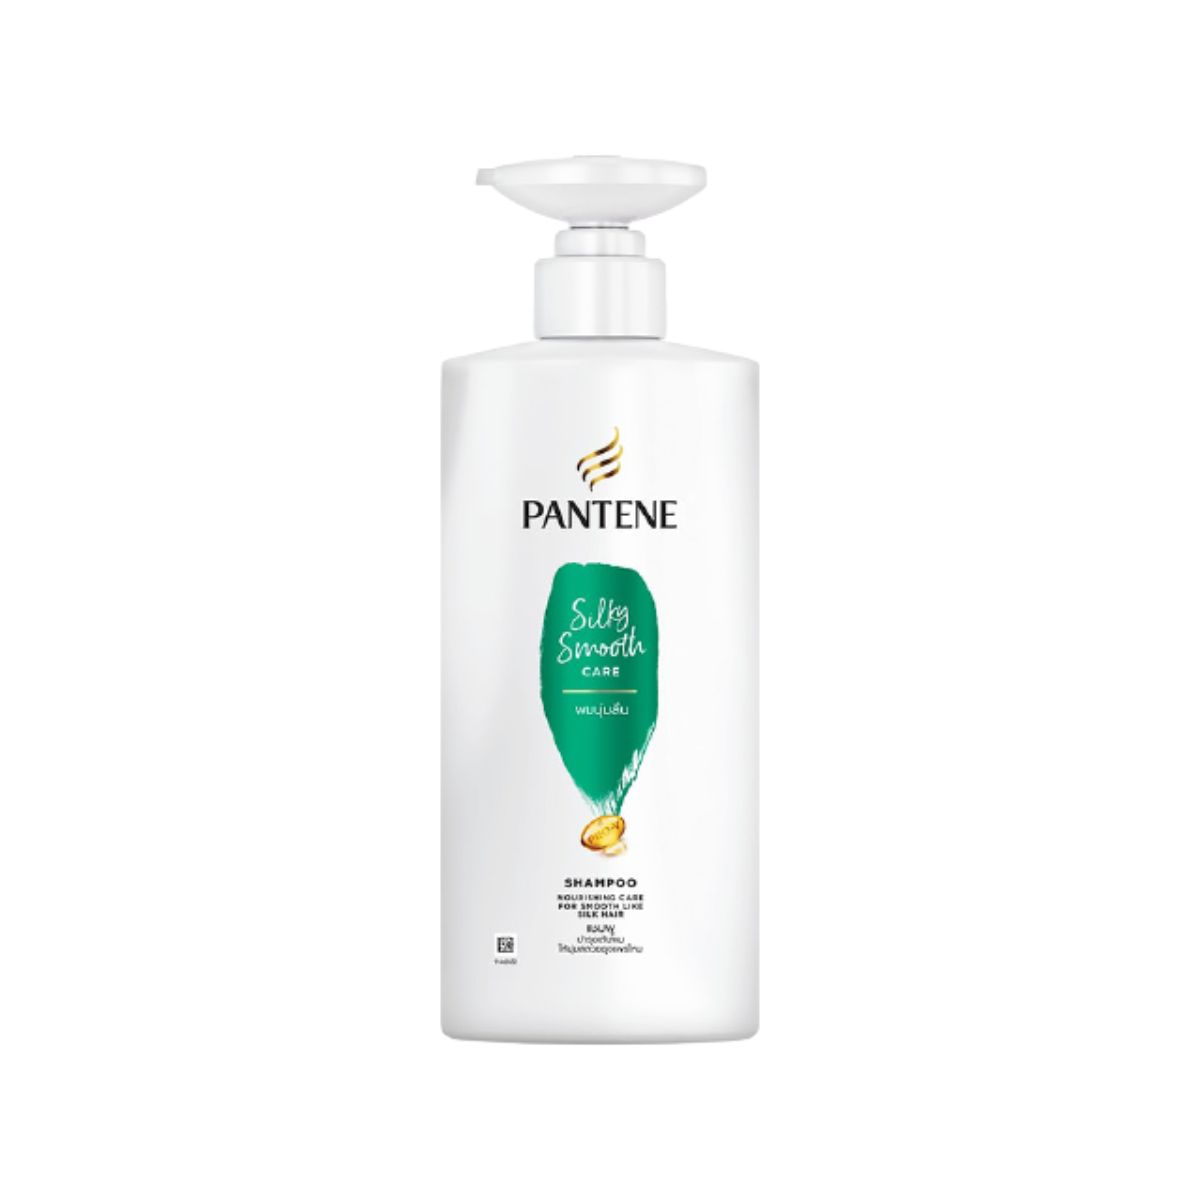 Pantene Silky Smooth Care Shampoo - 410ml